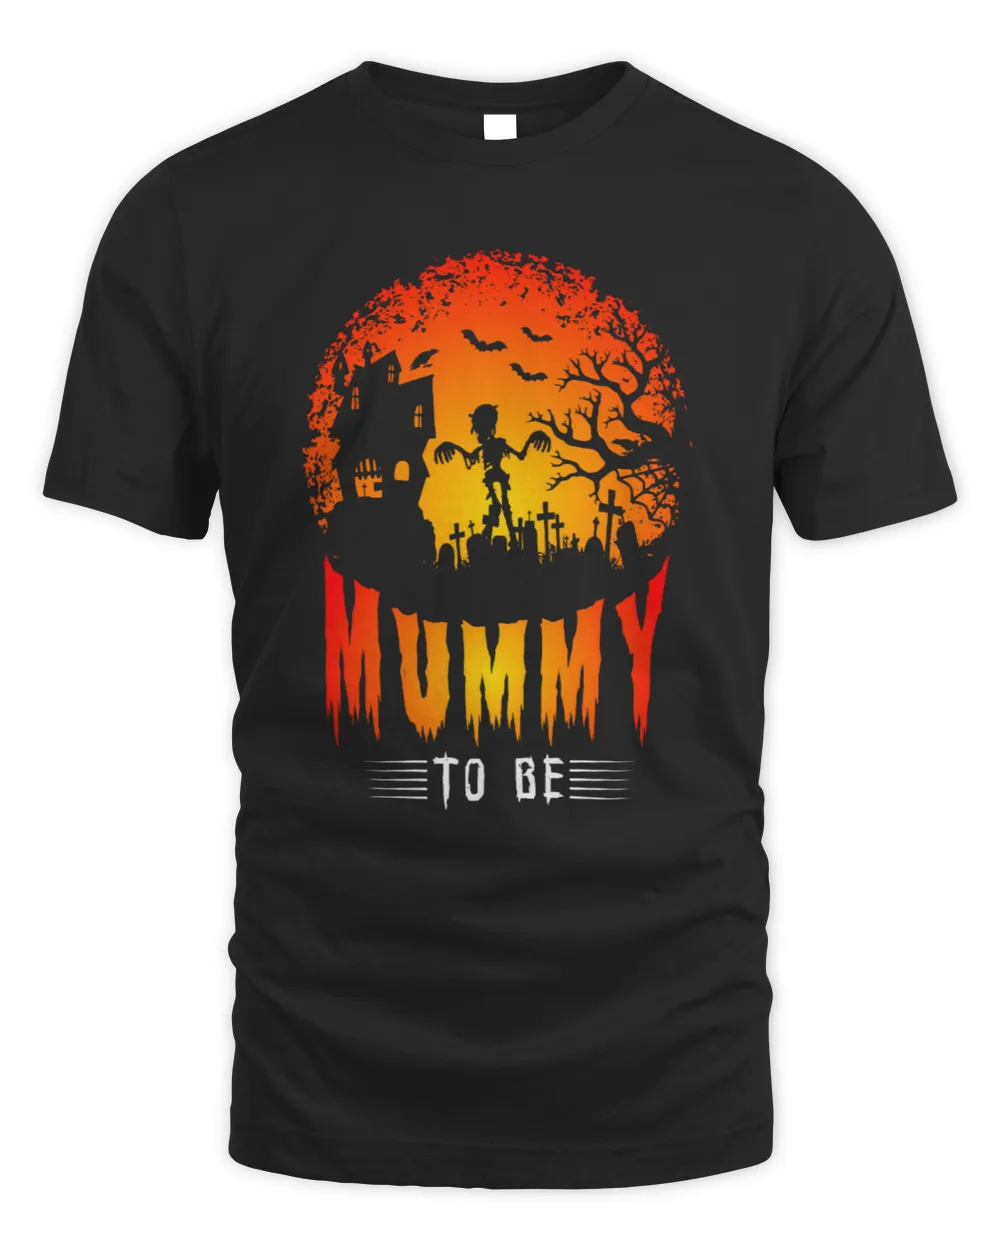 Mummy to be